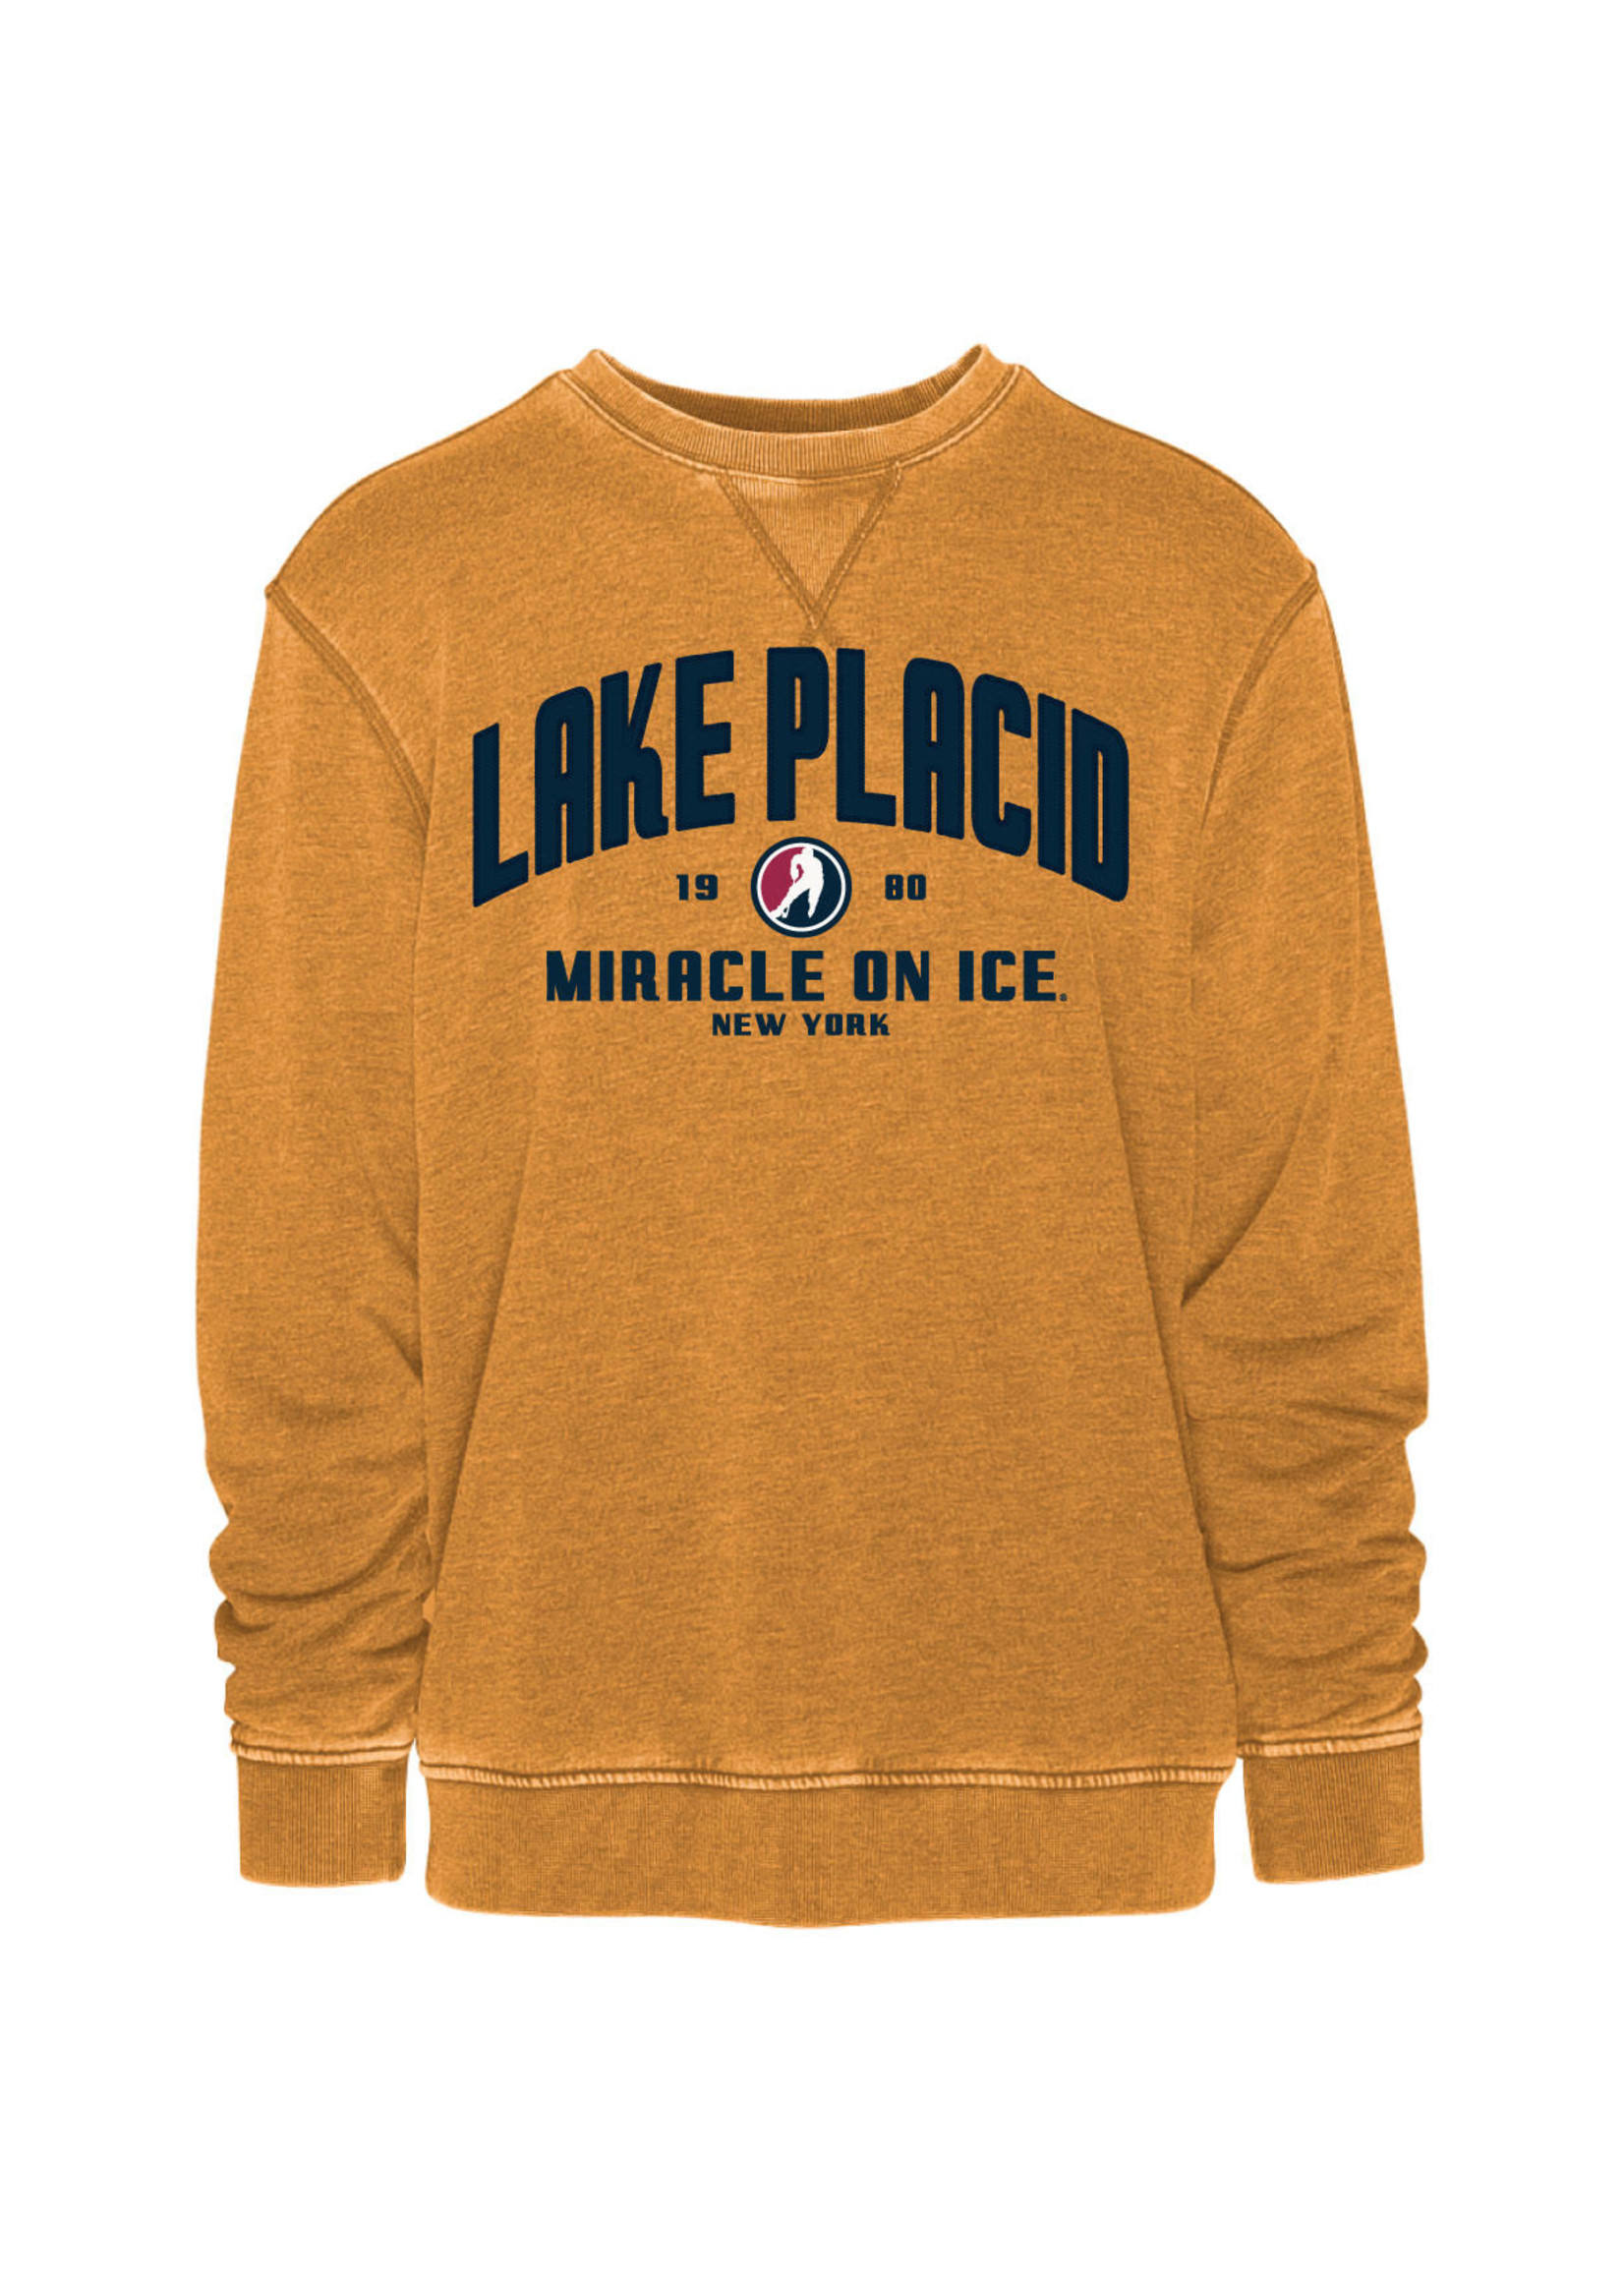 Lake Placid 1980 Miracle on Ice Gold Vintage Crew